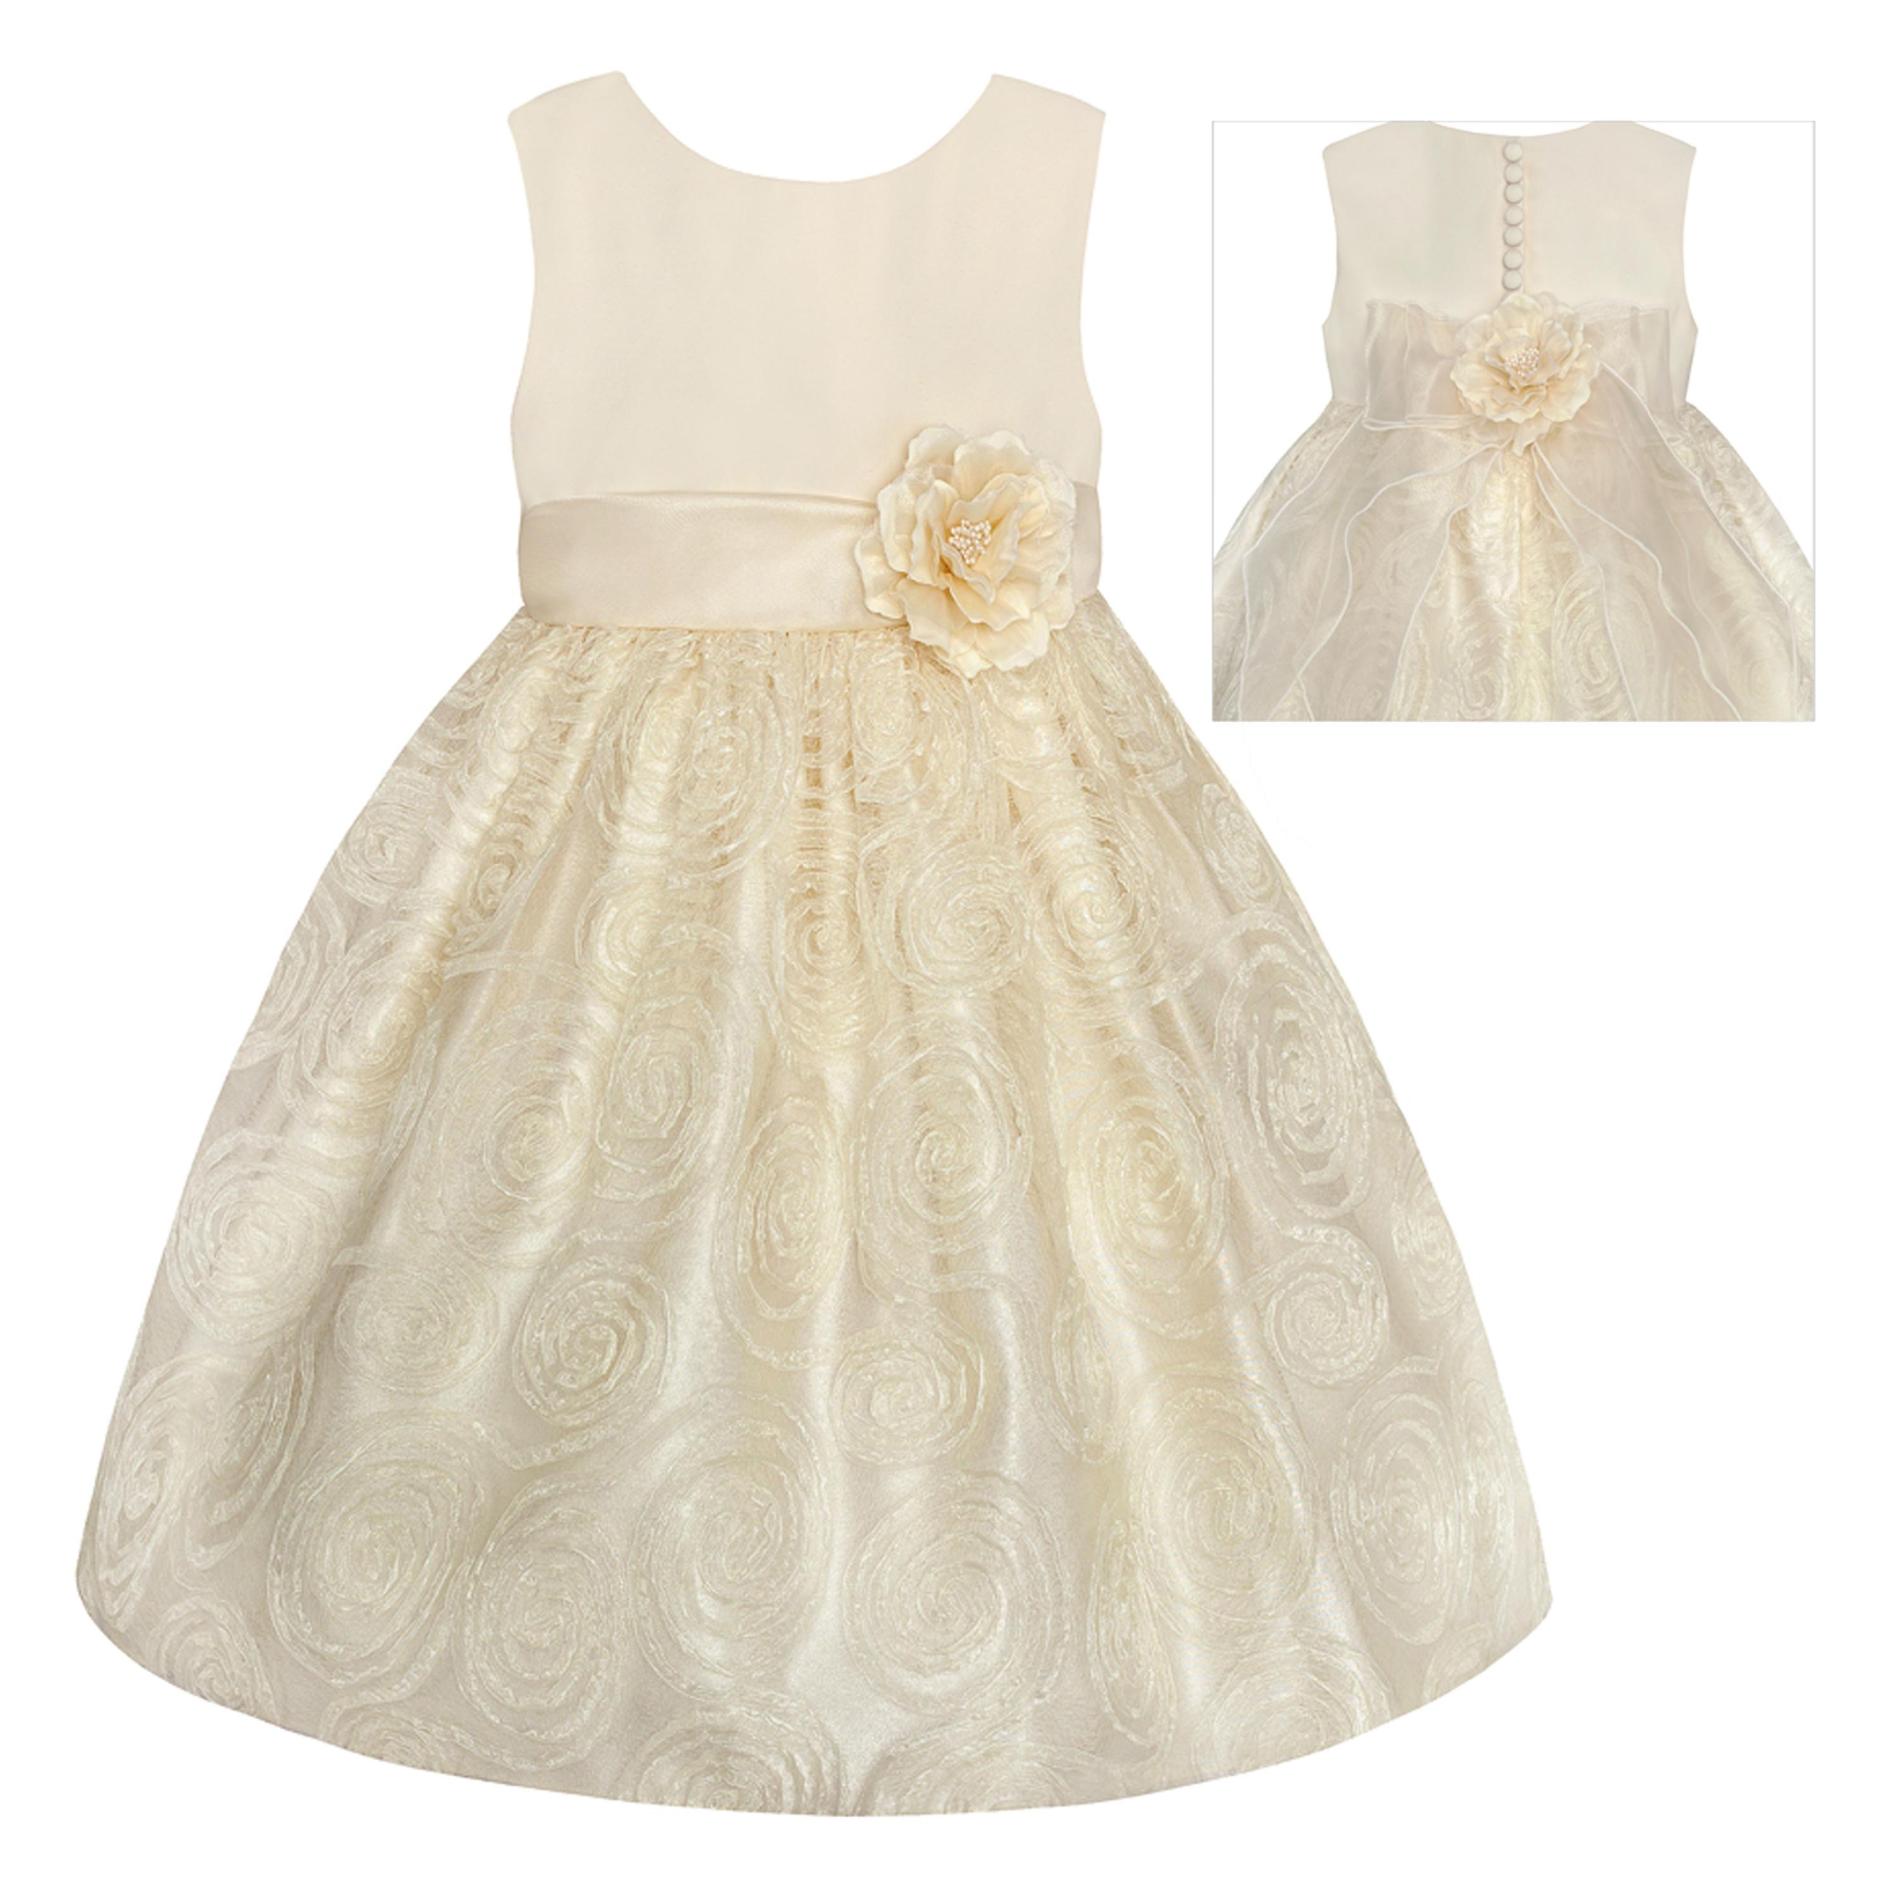 American Princess Infant & Toddler Girl's Soutache Party Dress